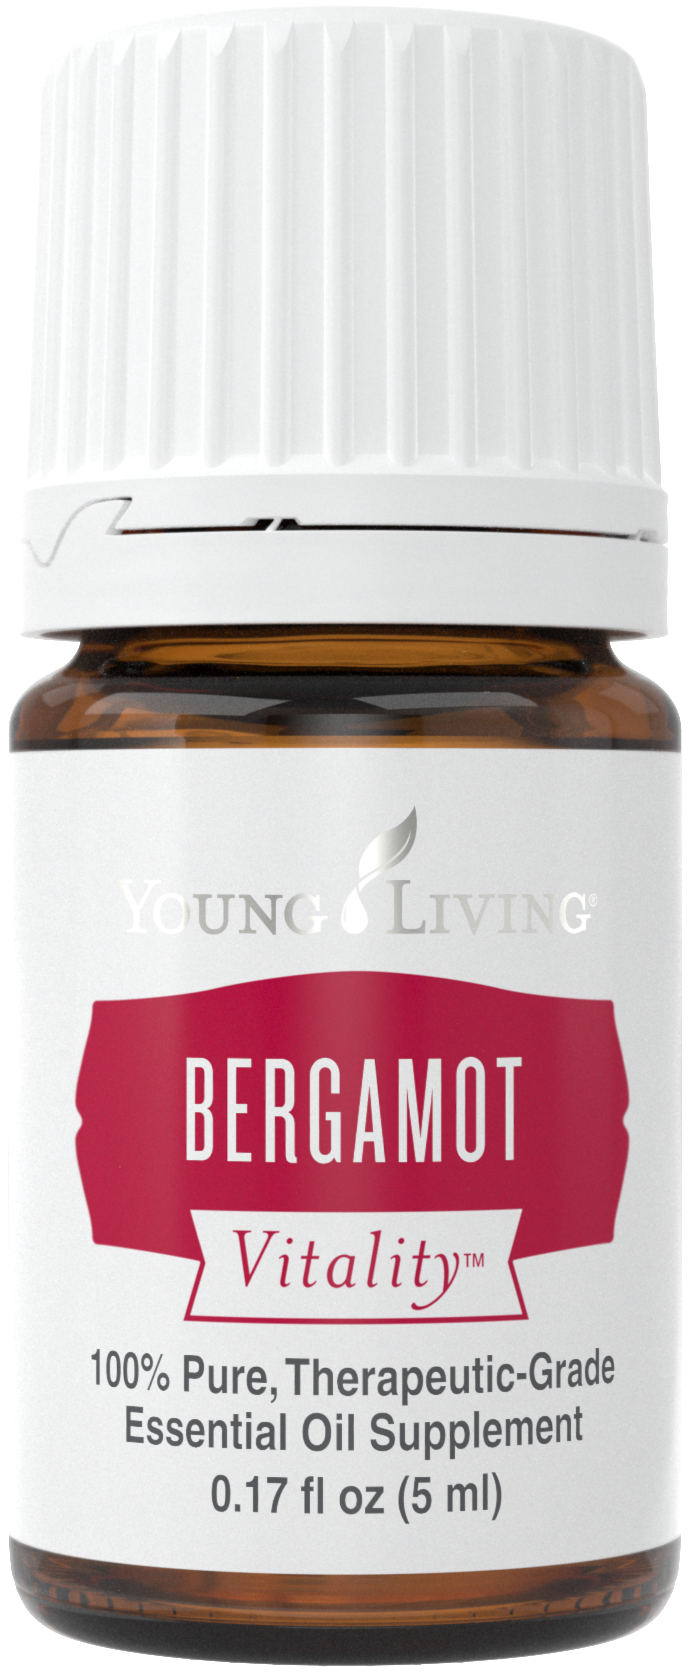 Bergamot Vitality Silo.png